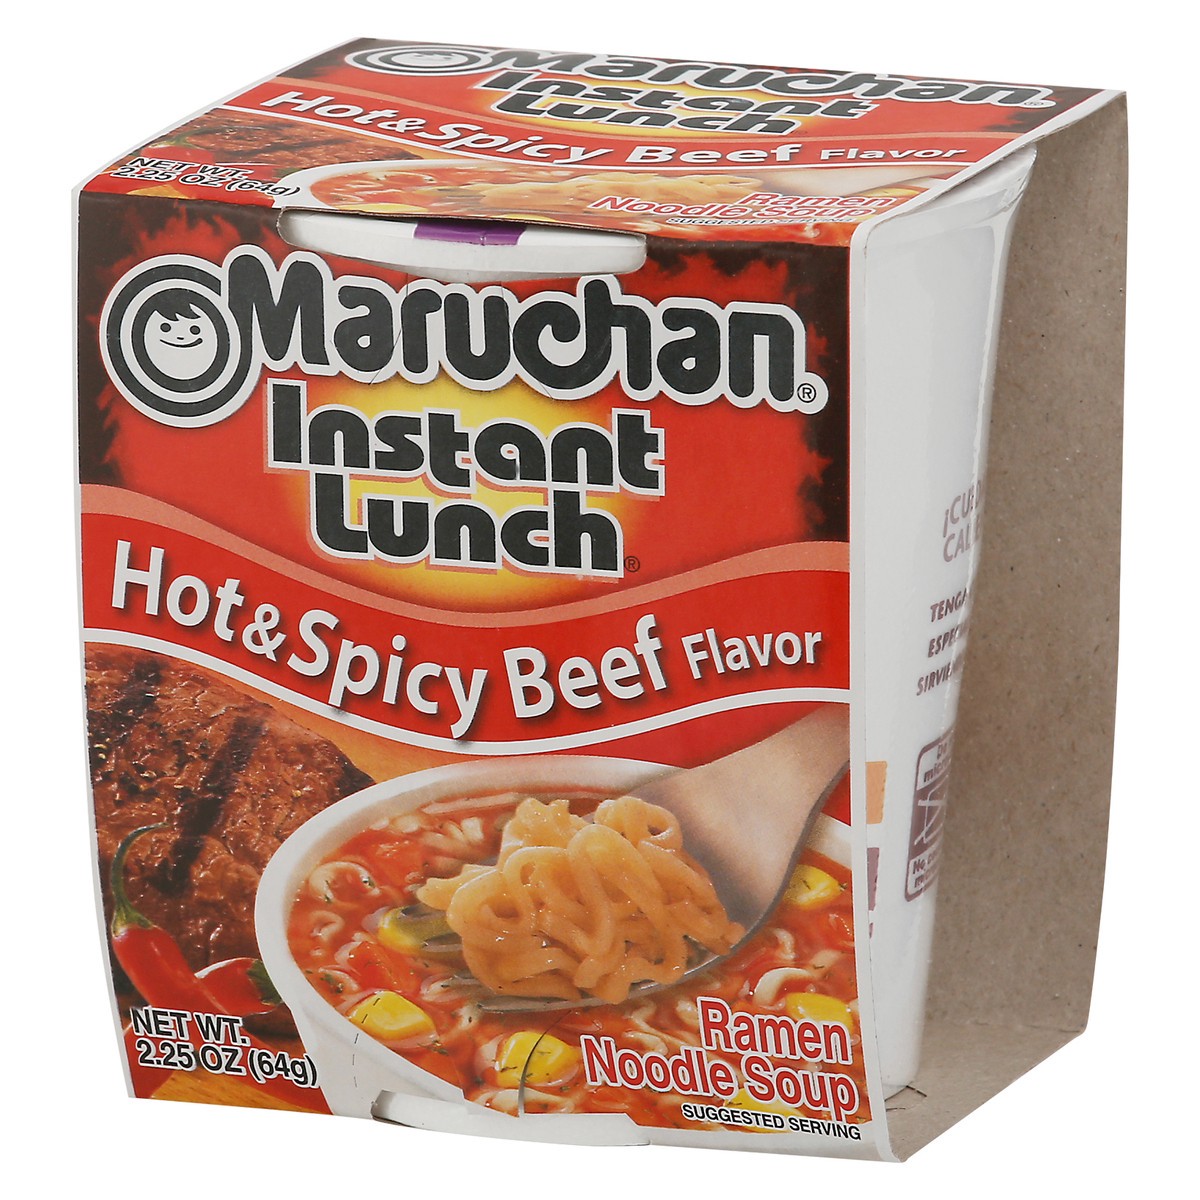 slide 3 of 9, Maruchan Instant Lunch Hot & Spicy Beef Flavor Ramen Noodle Soup, 2.25 oz